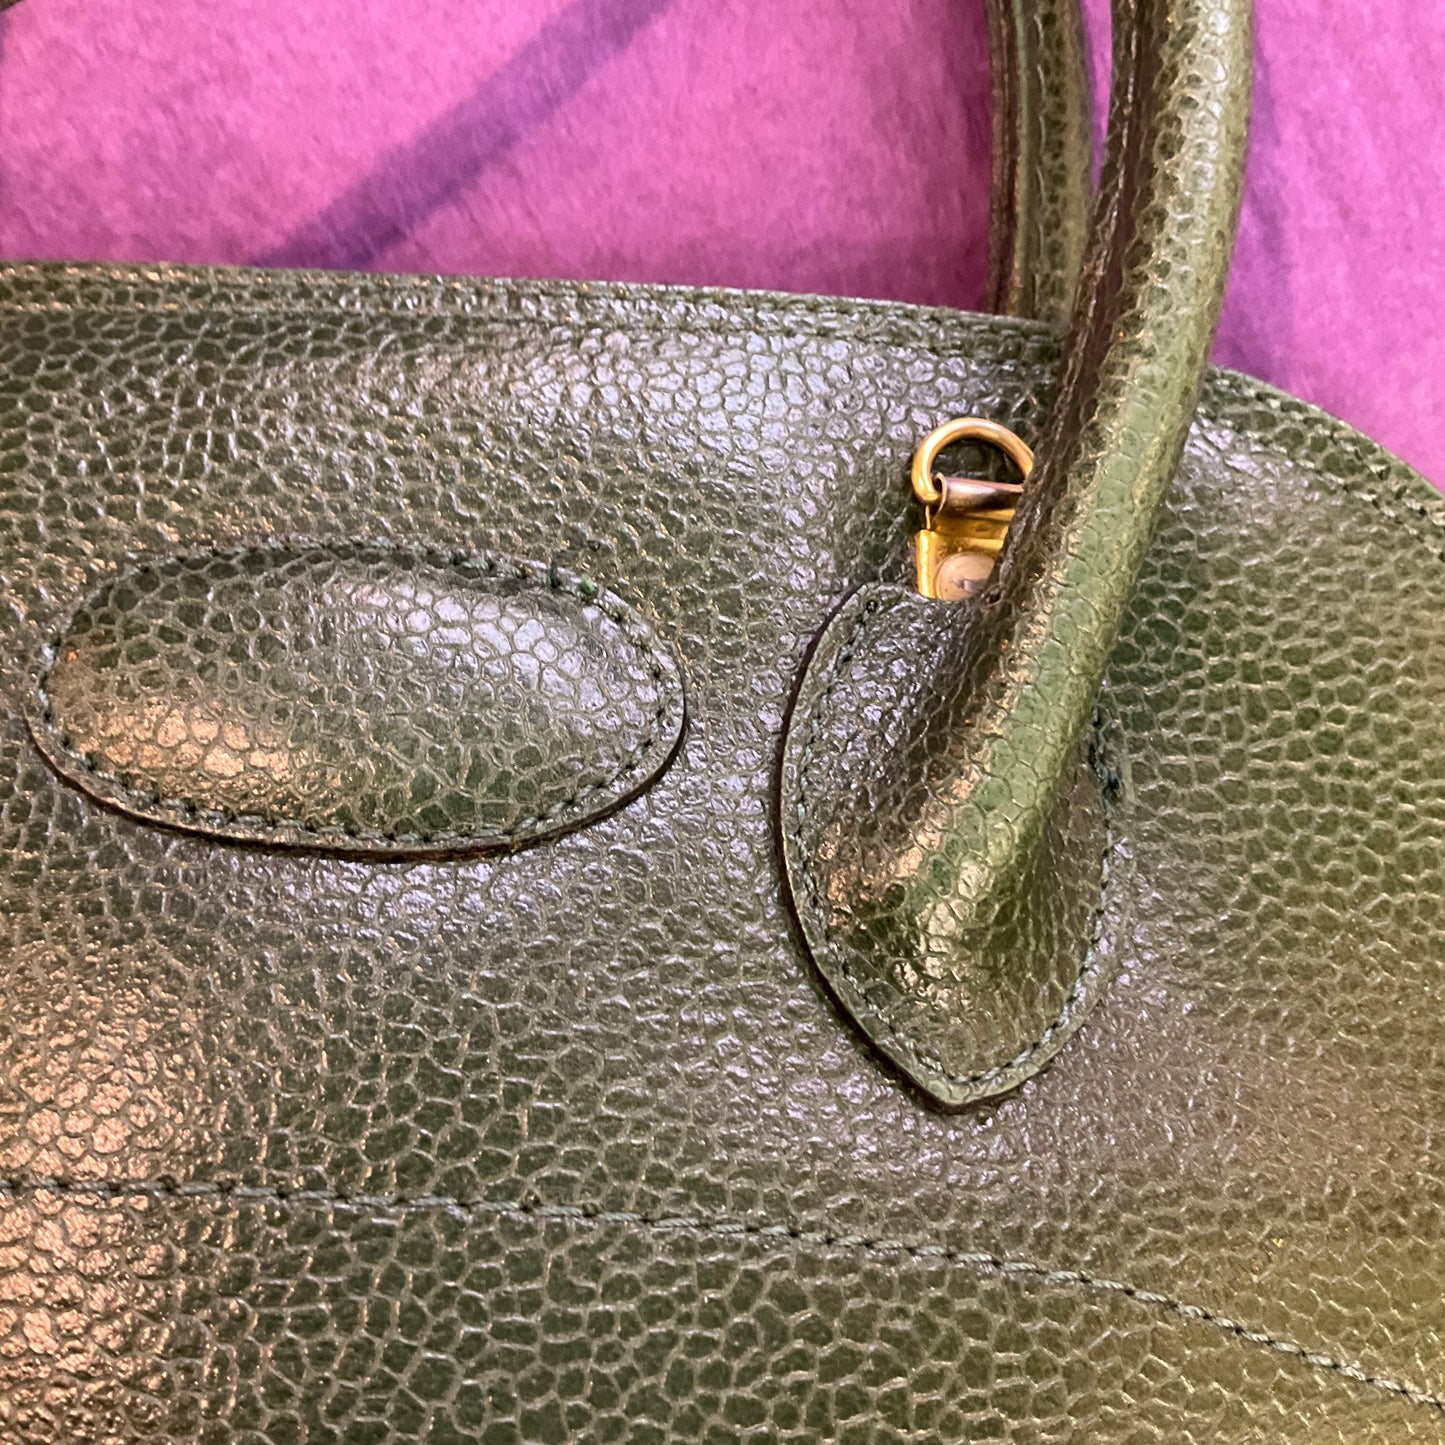 Vintage 1960s Retro Green Leather handbag, lock and key, vintage gift